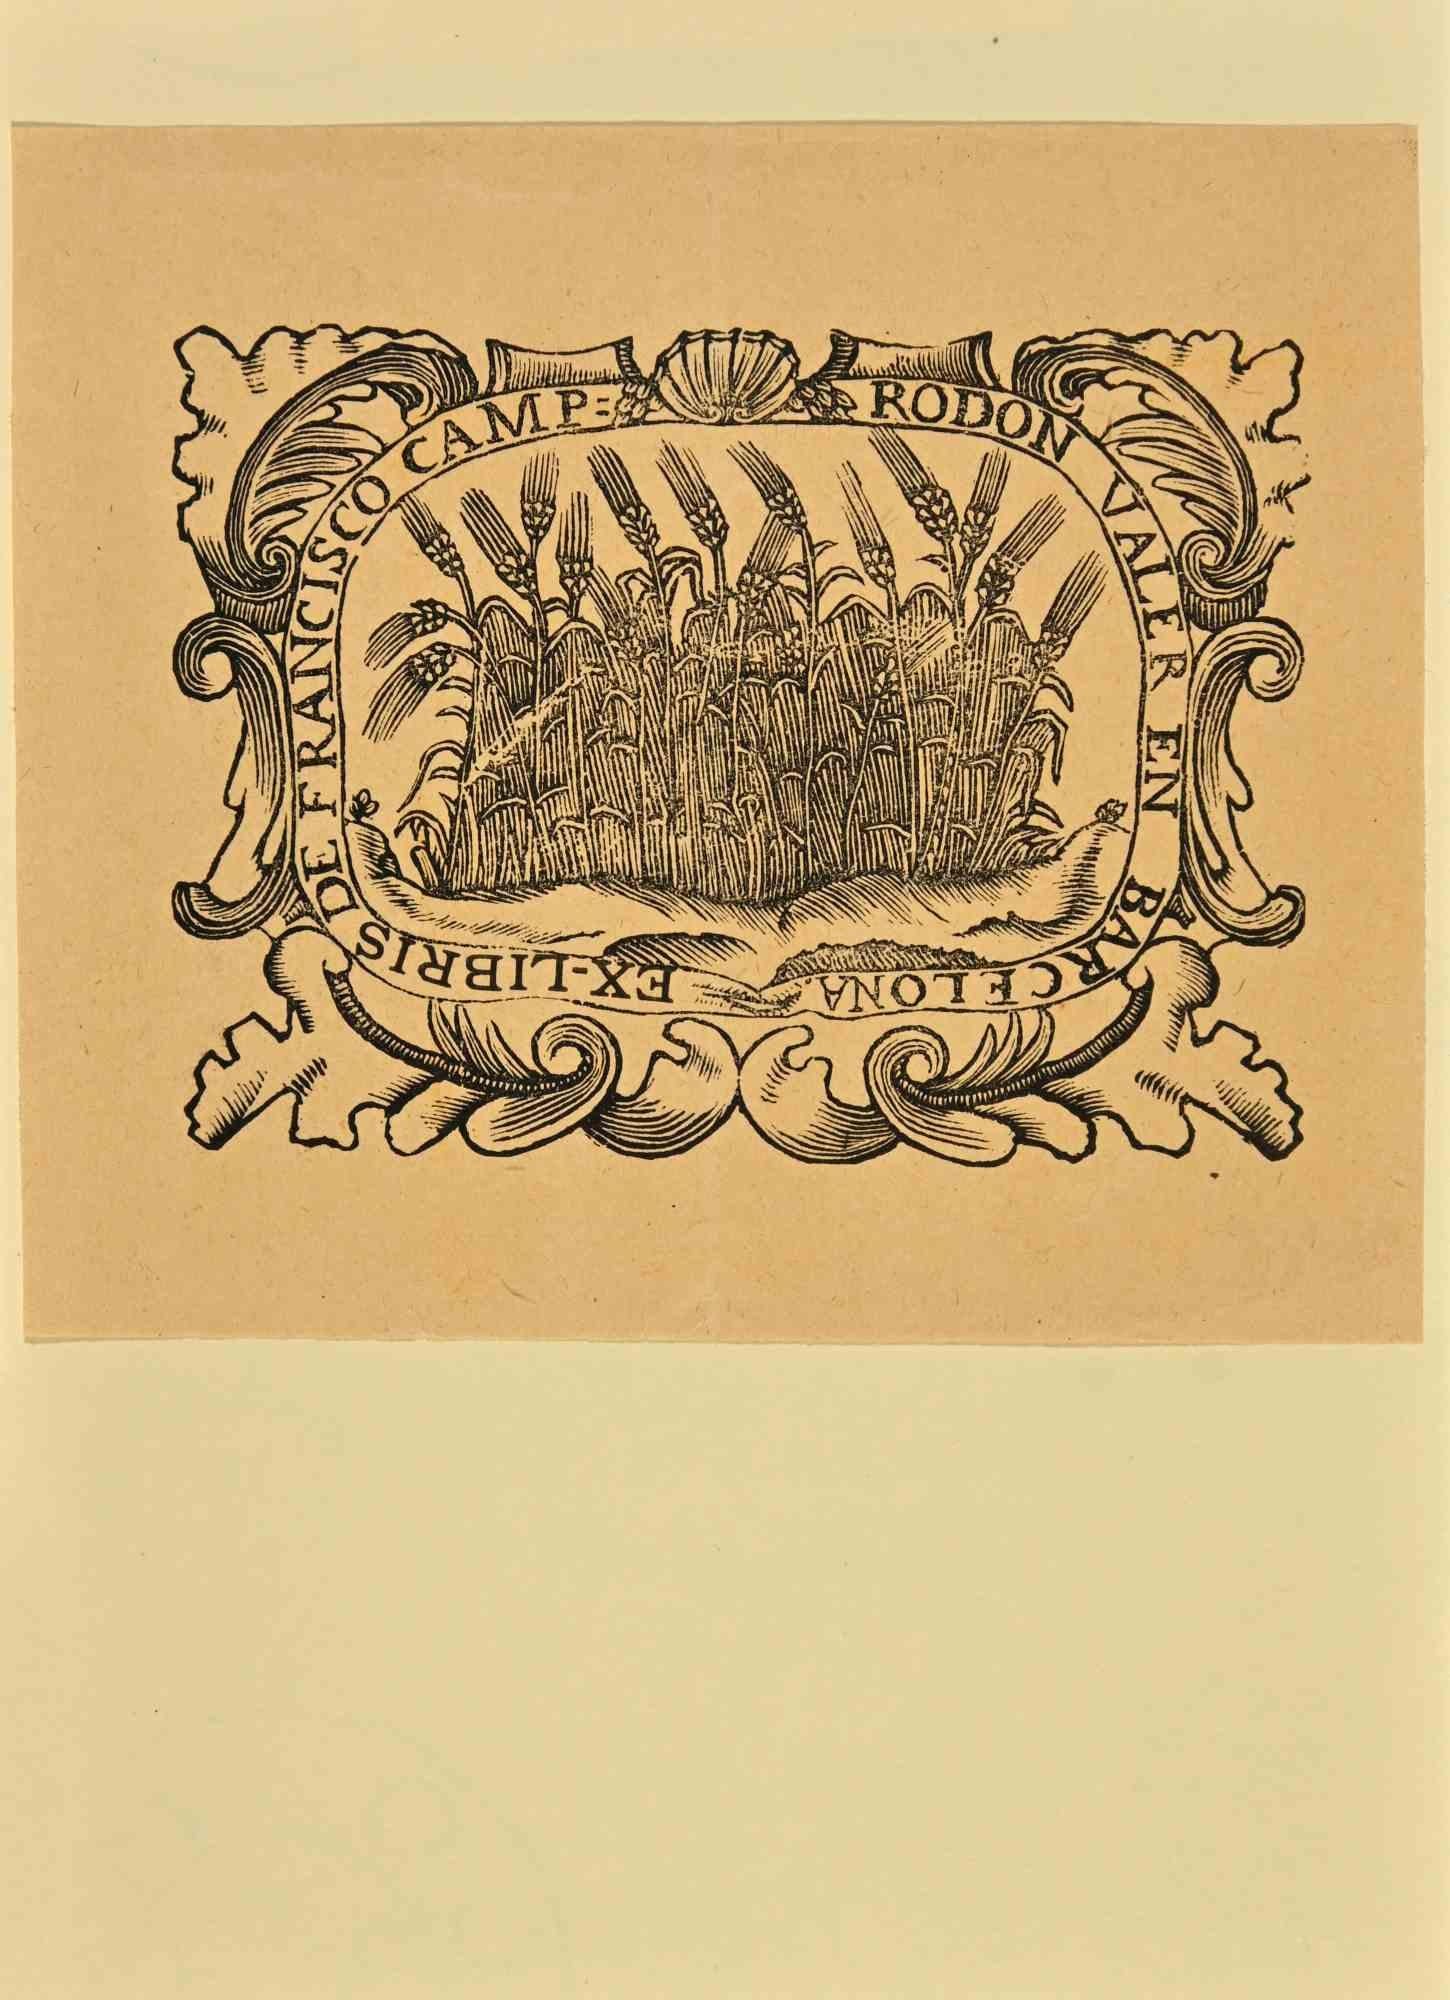 Unknown Figurative Print - Ex Libris de Francisco Camp Rodon Valer - Woodcut Print - Mid-20th Century